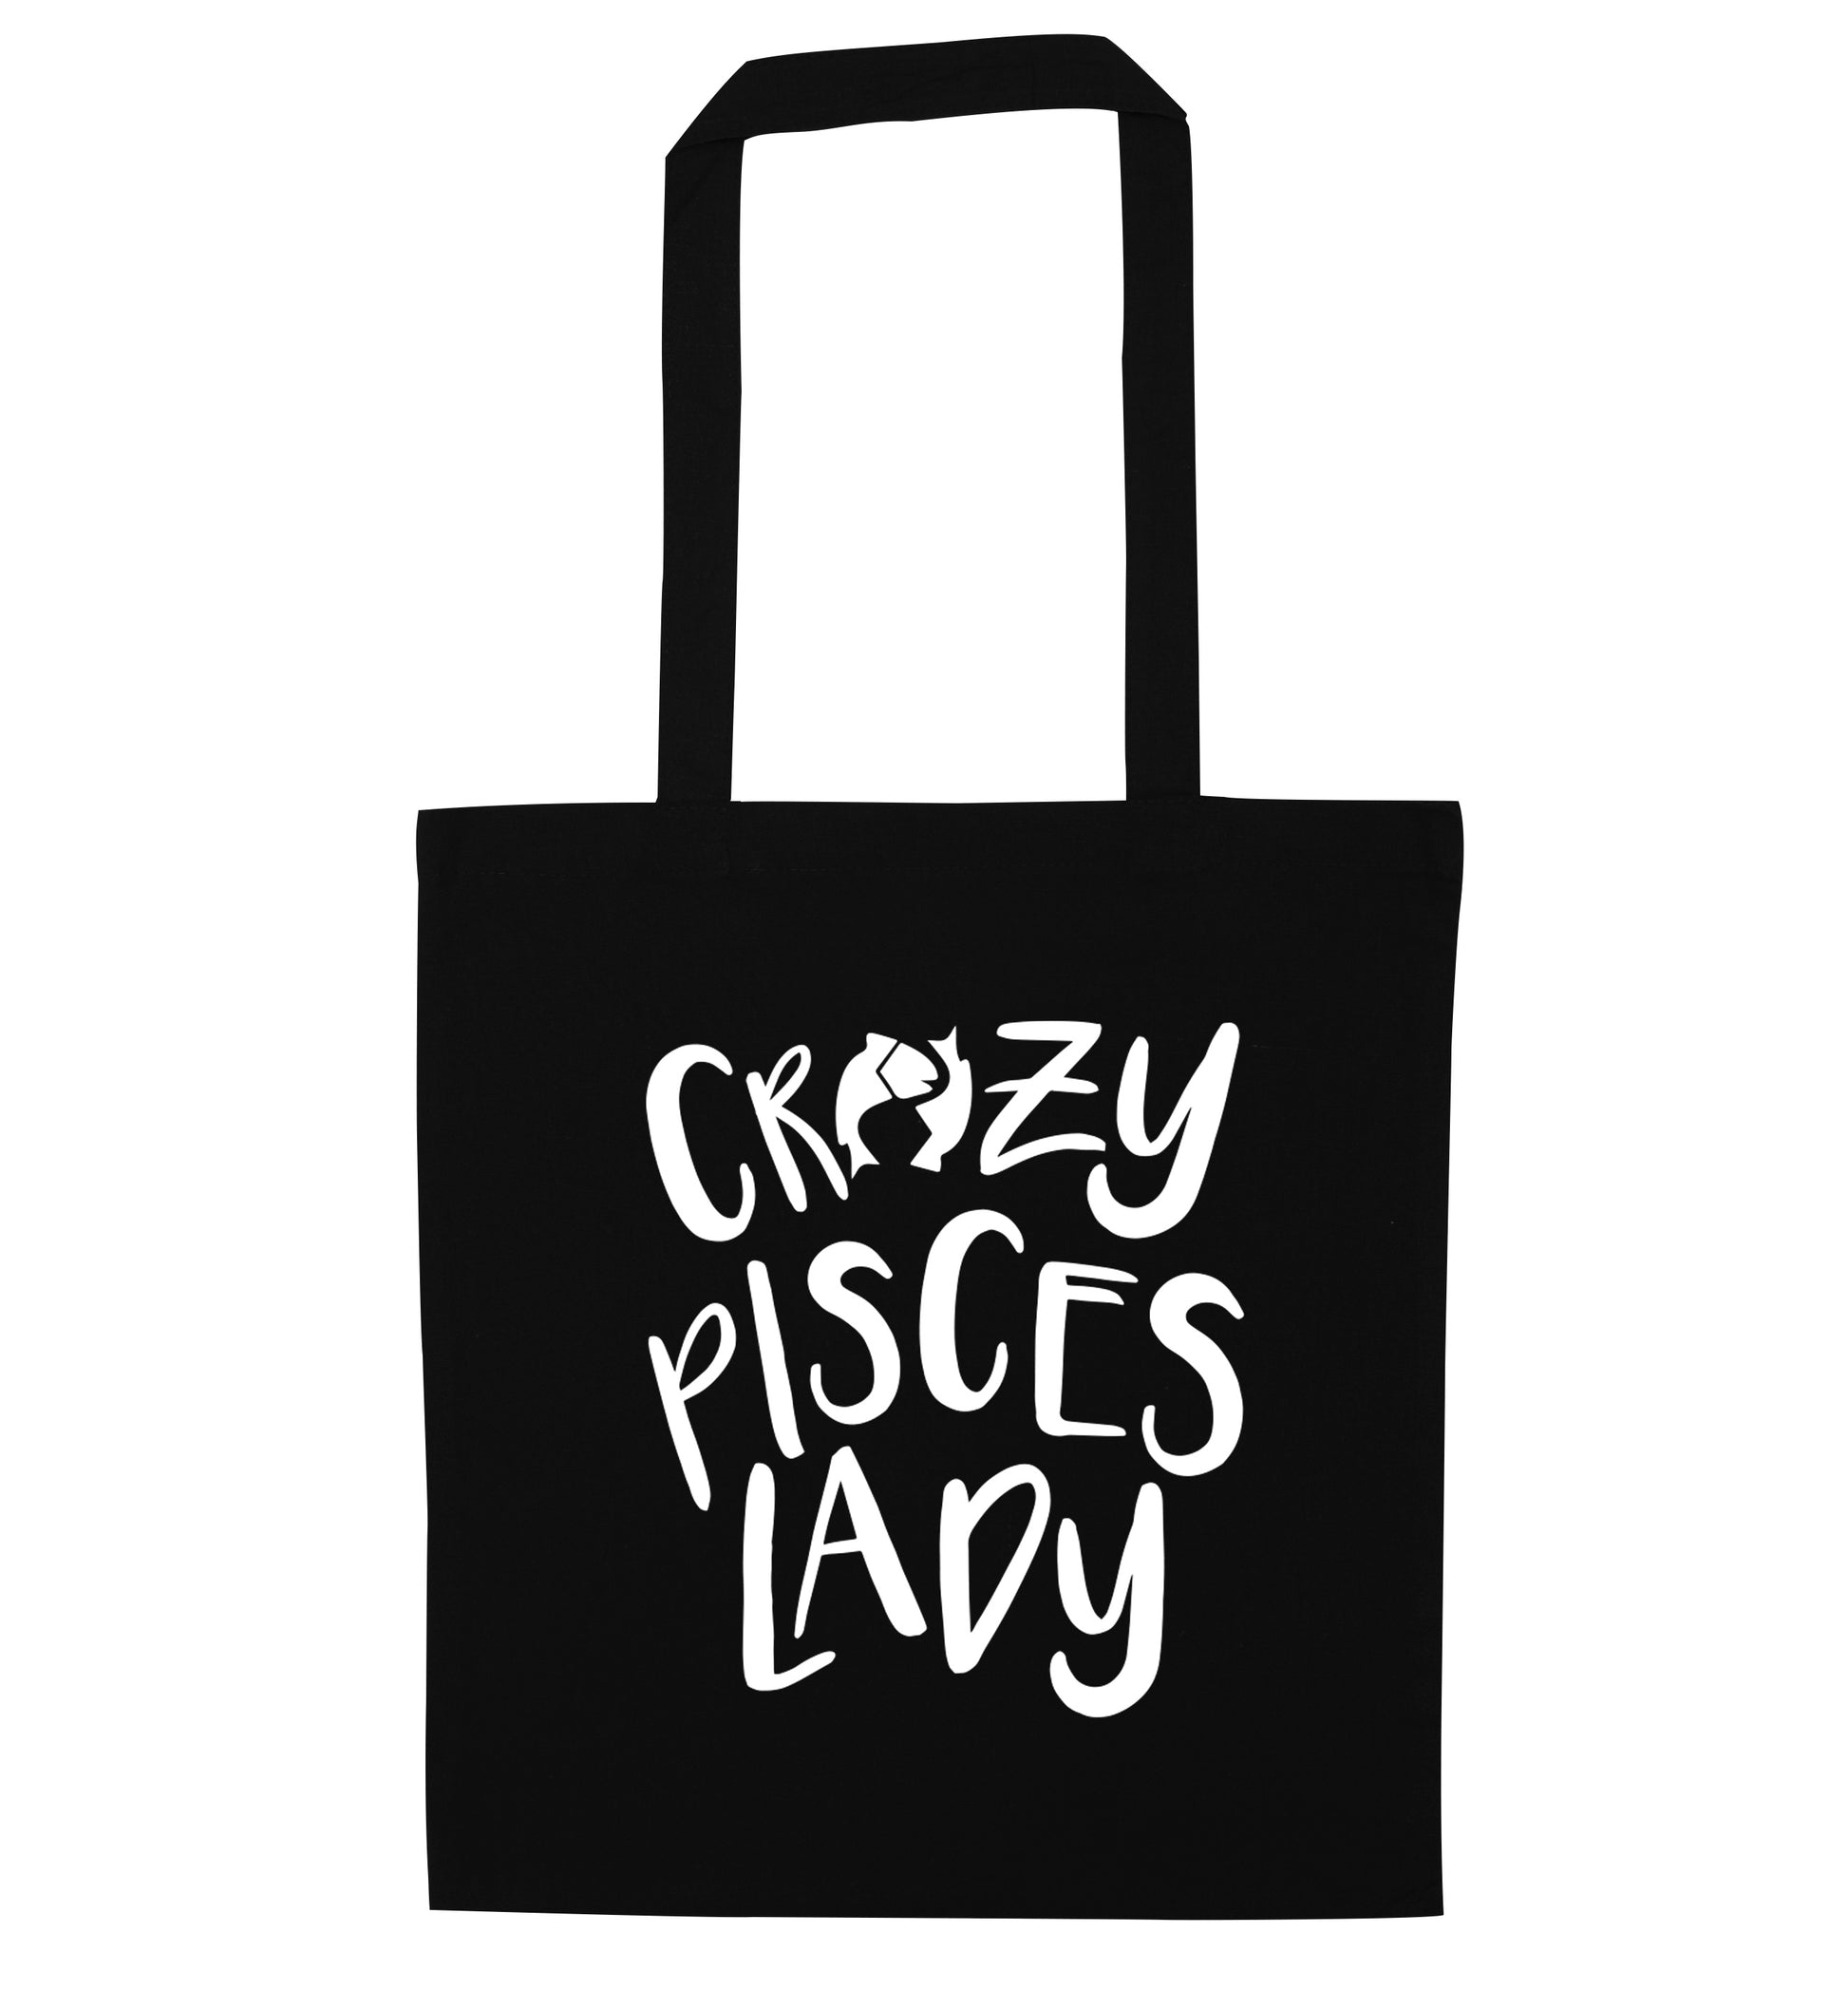 Crazy pisces Lady black tote bag